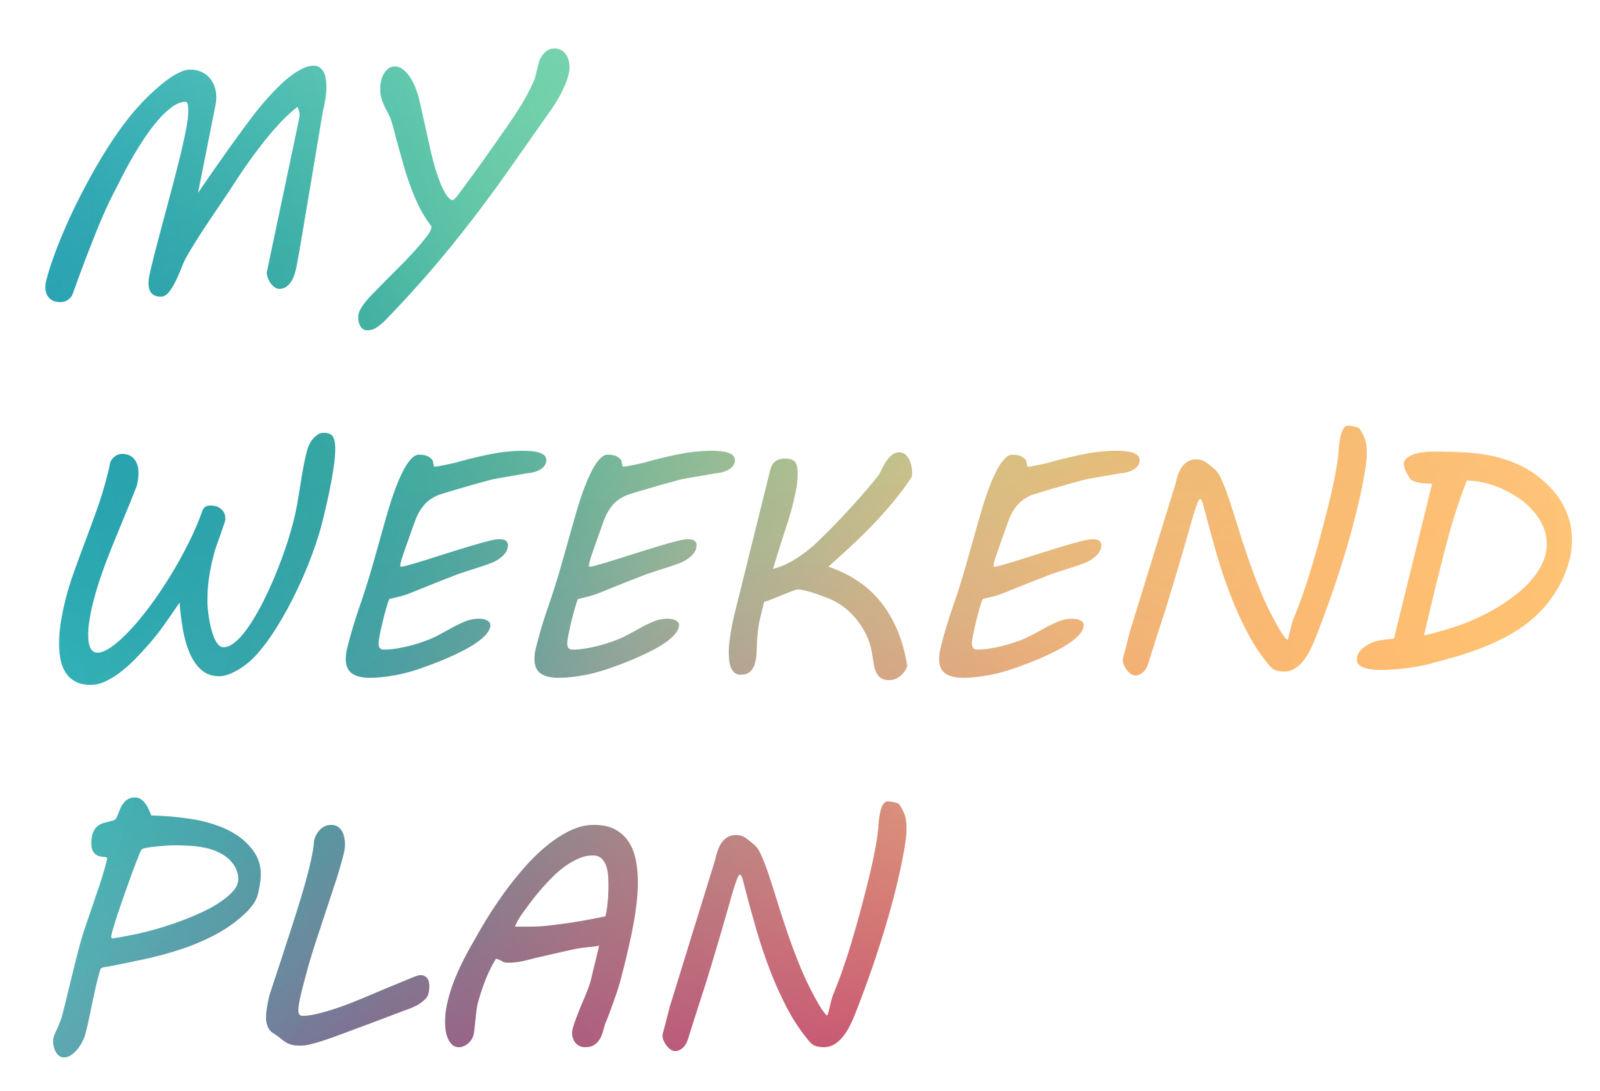 My ideal weekend проект. My weekend Plans. Картинки weekend Plan. Weekend английский язык.